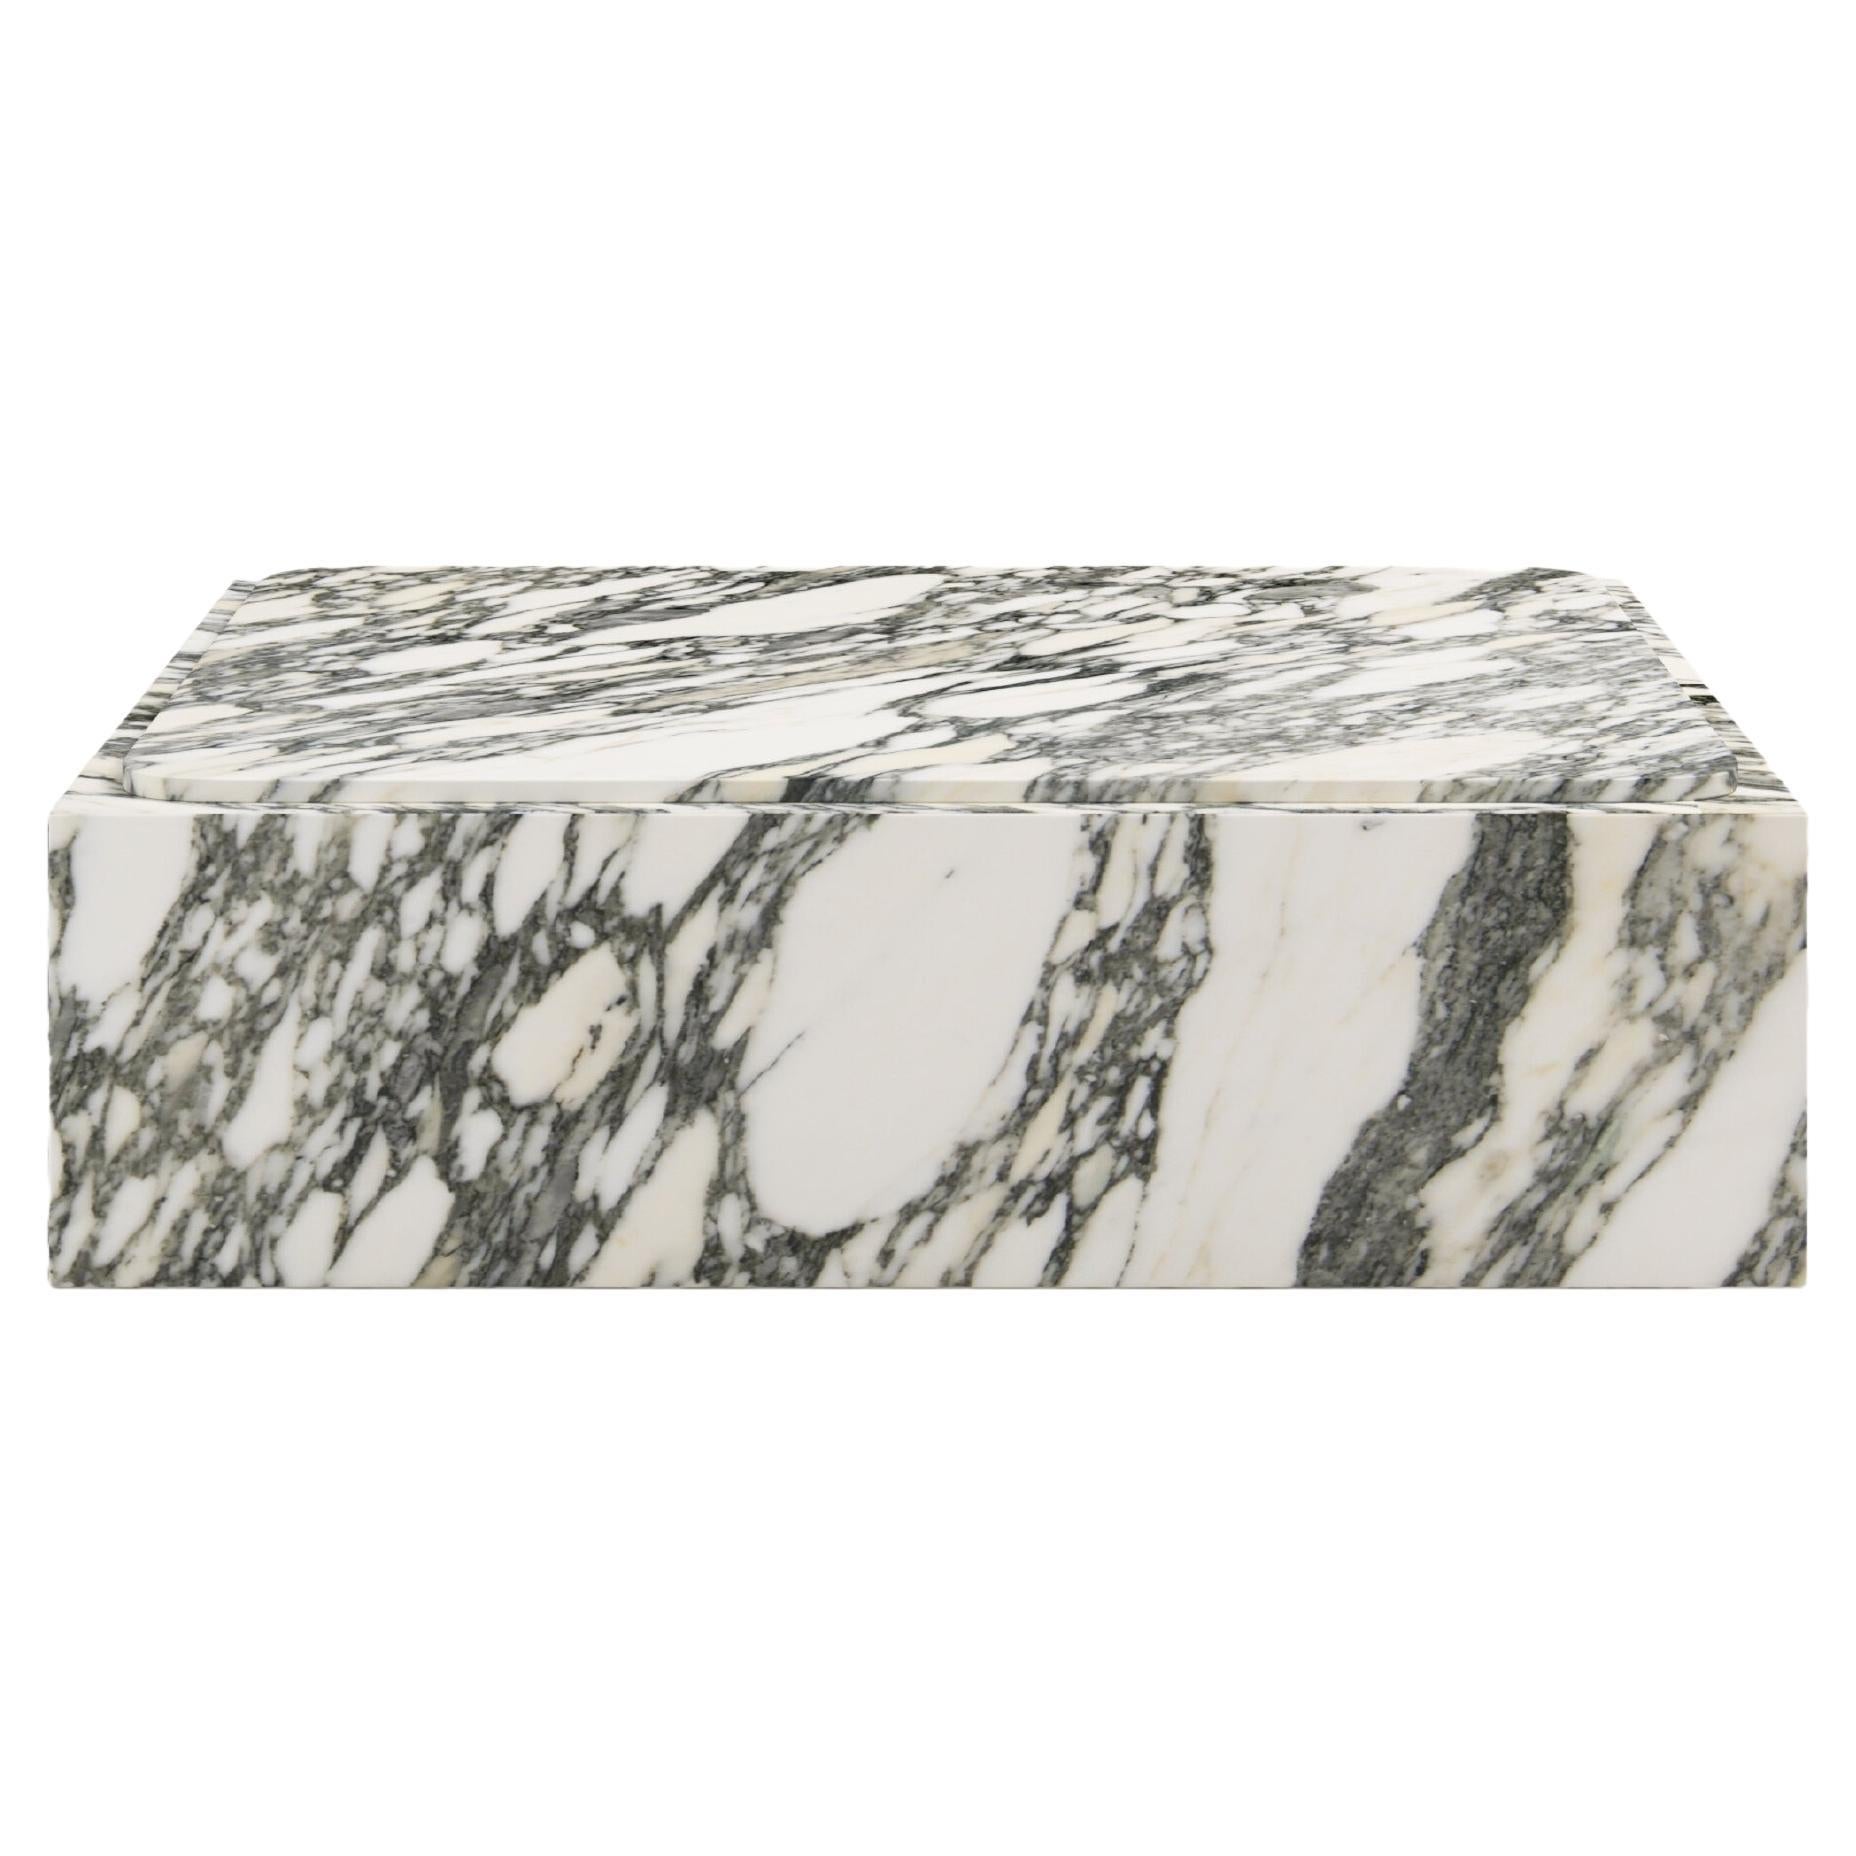 FORM(LA) Cubo Square Plinth Coffee Table 48”L x 48"W x 13”H Arabescato Marble For Sale